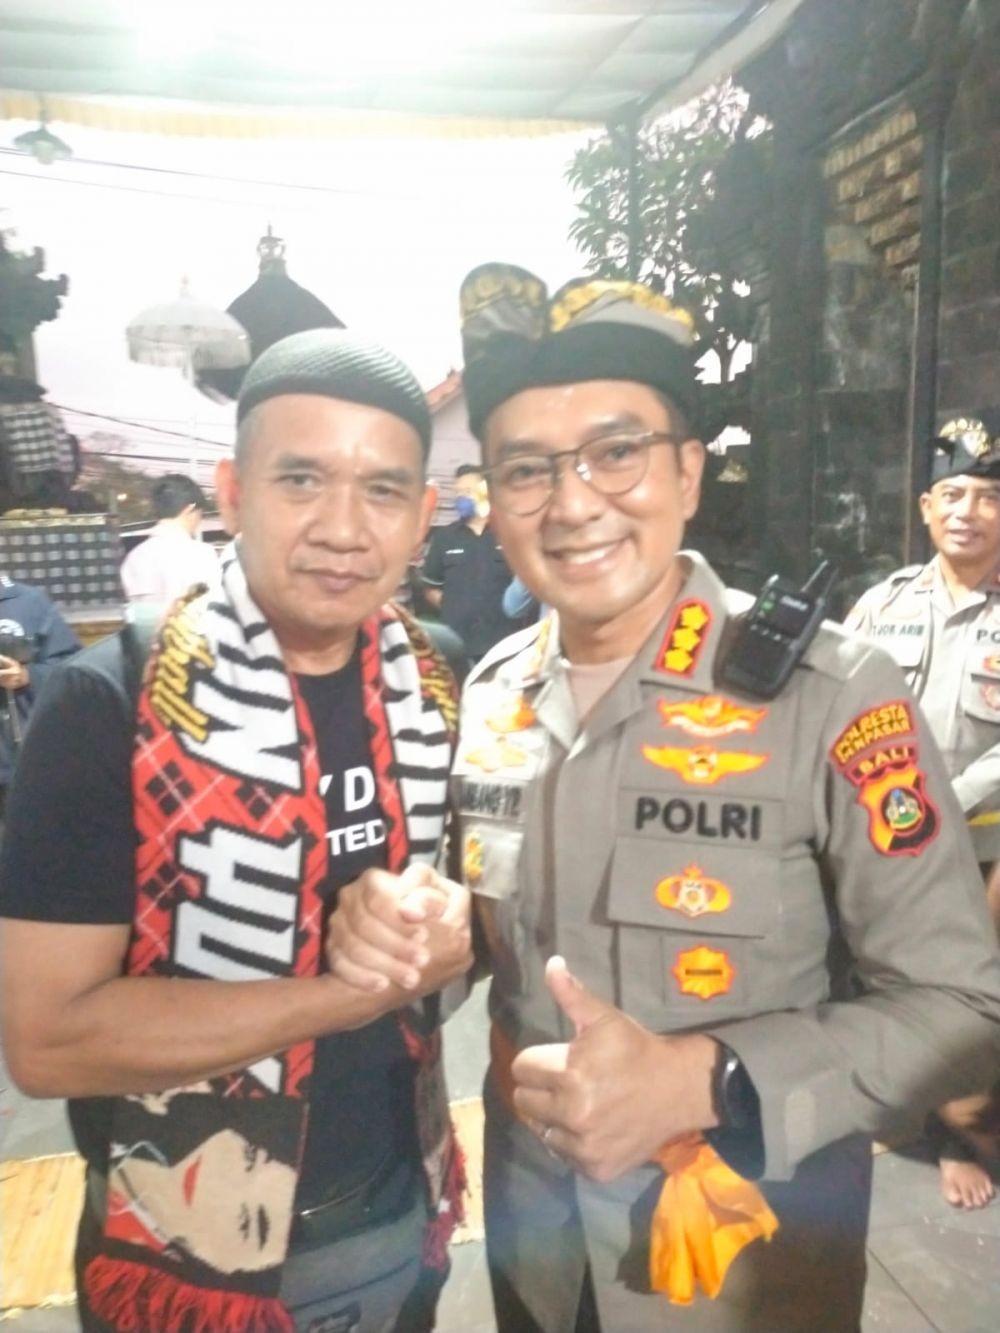 Utamakan Fair Play, Suporter Bali United Dilarang Buat Chant Provokatif